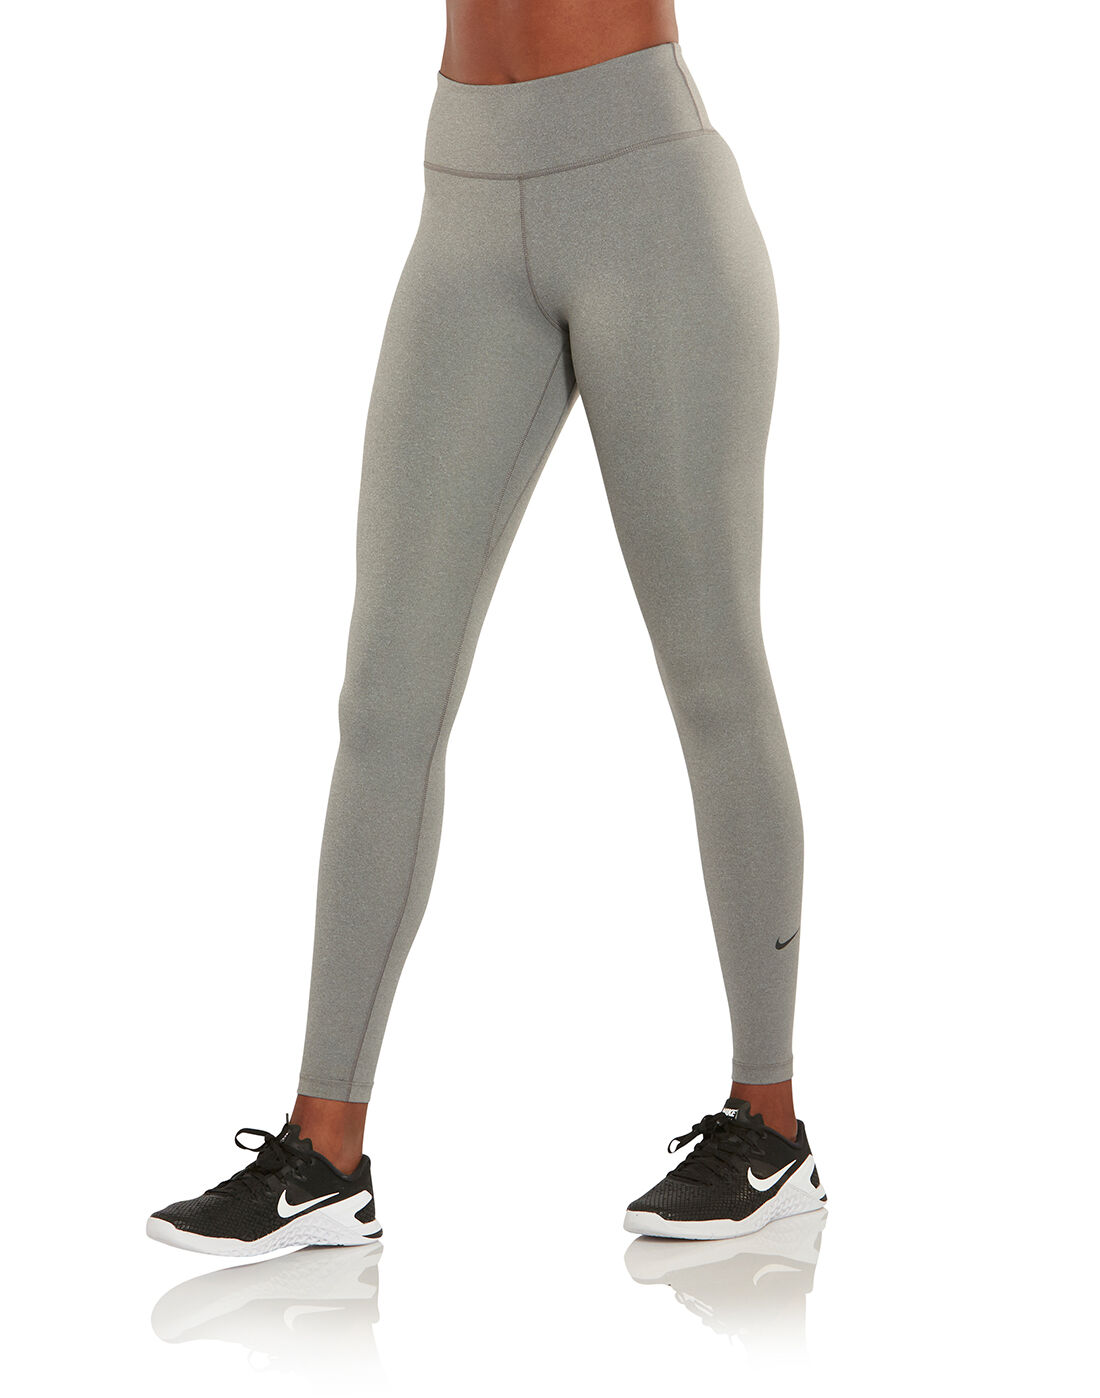 grey nike gym leggings